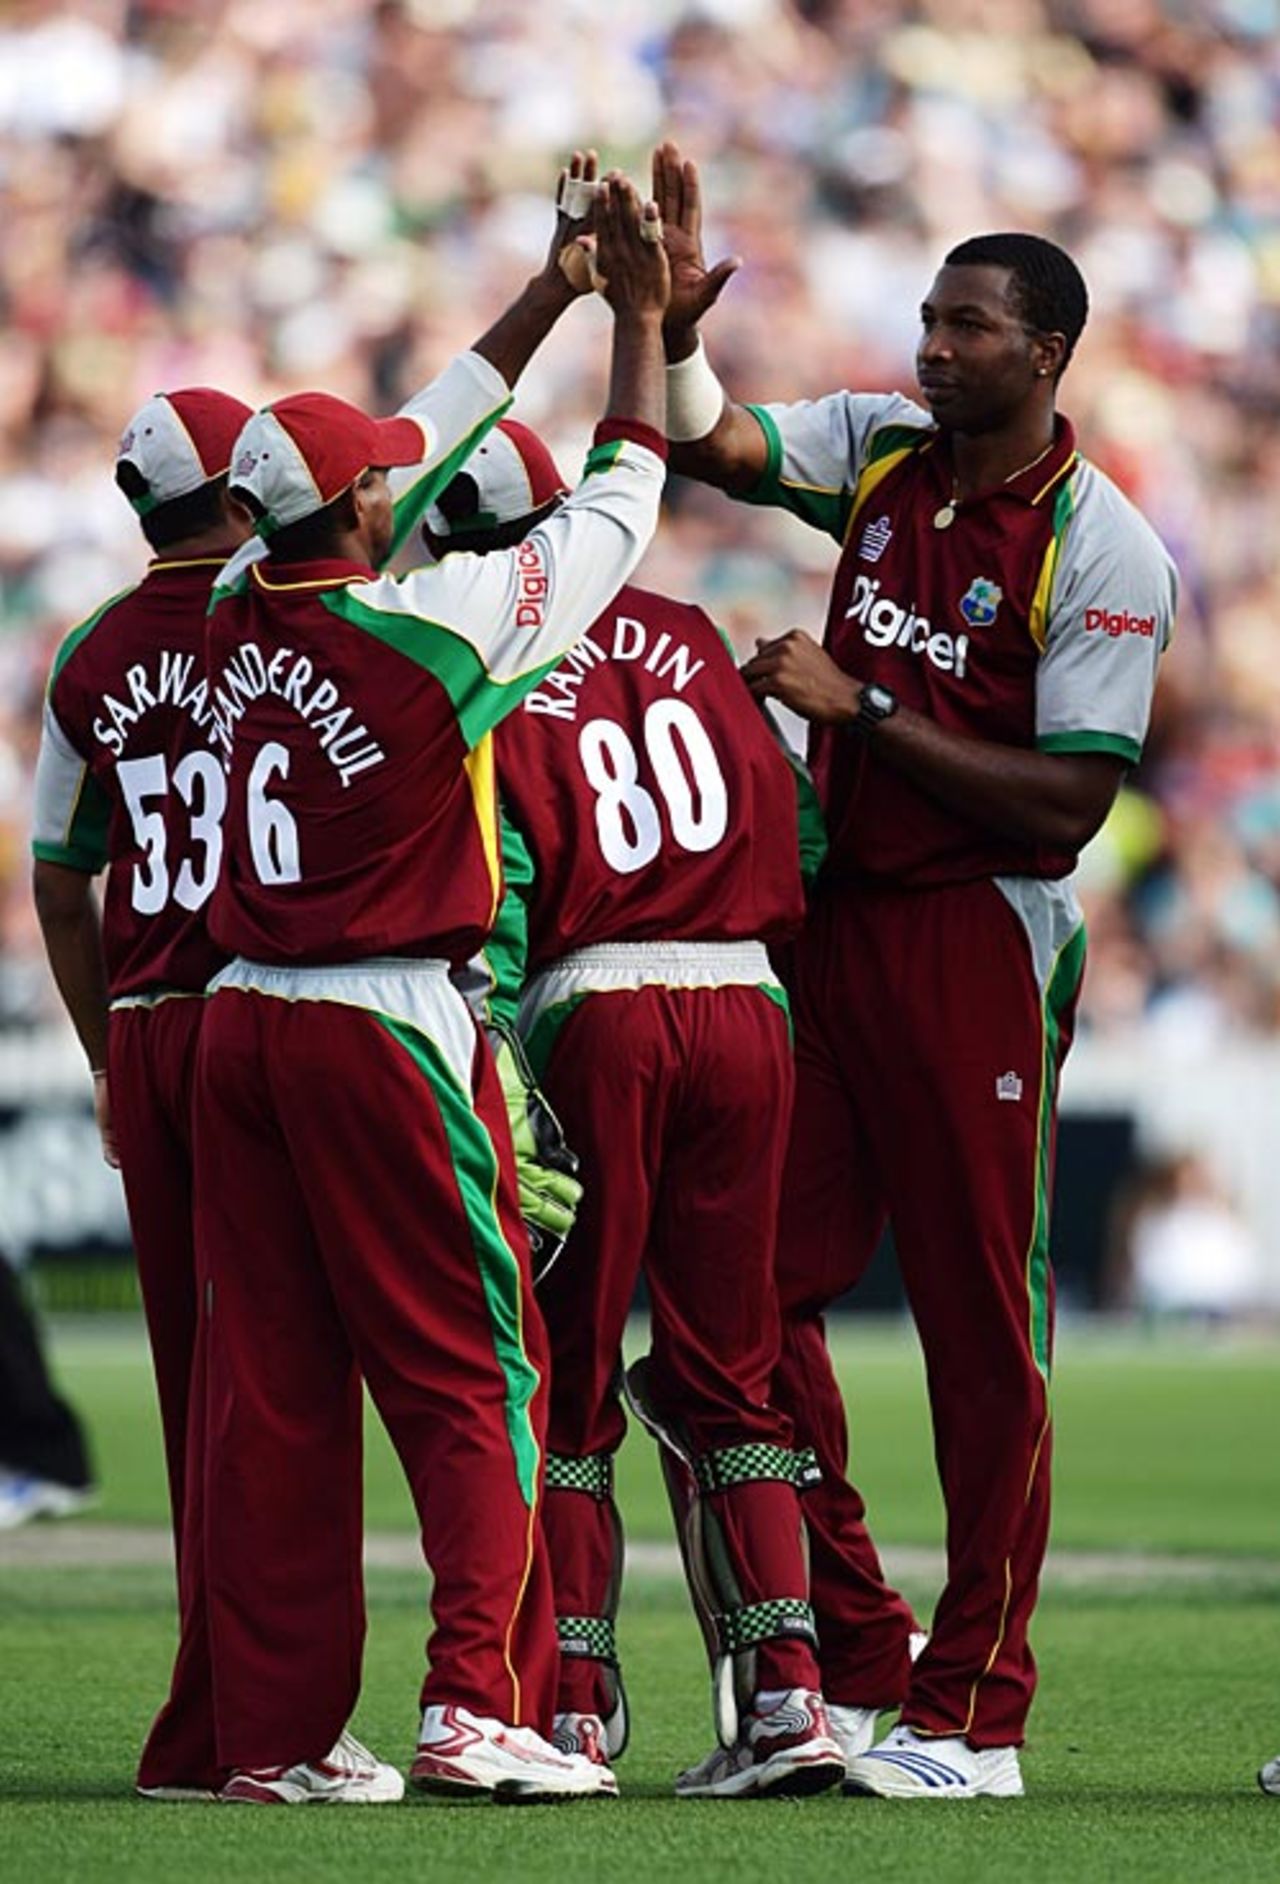 Sulieman Benn gets the high-fives from his team-mates after removing James Franklin, New Zealand v West Indies, 2nd Twenty20, Hamilton, December 28, 2008